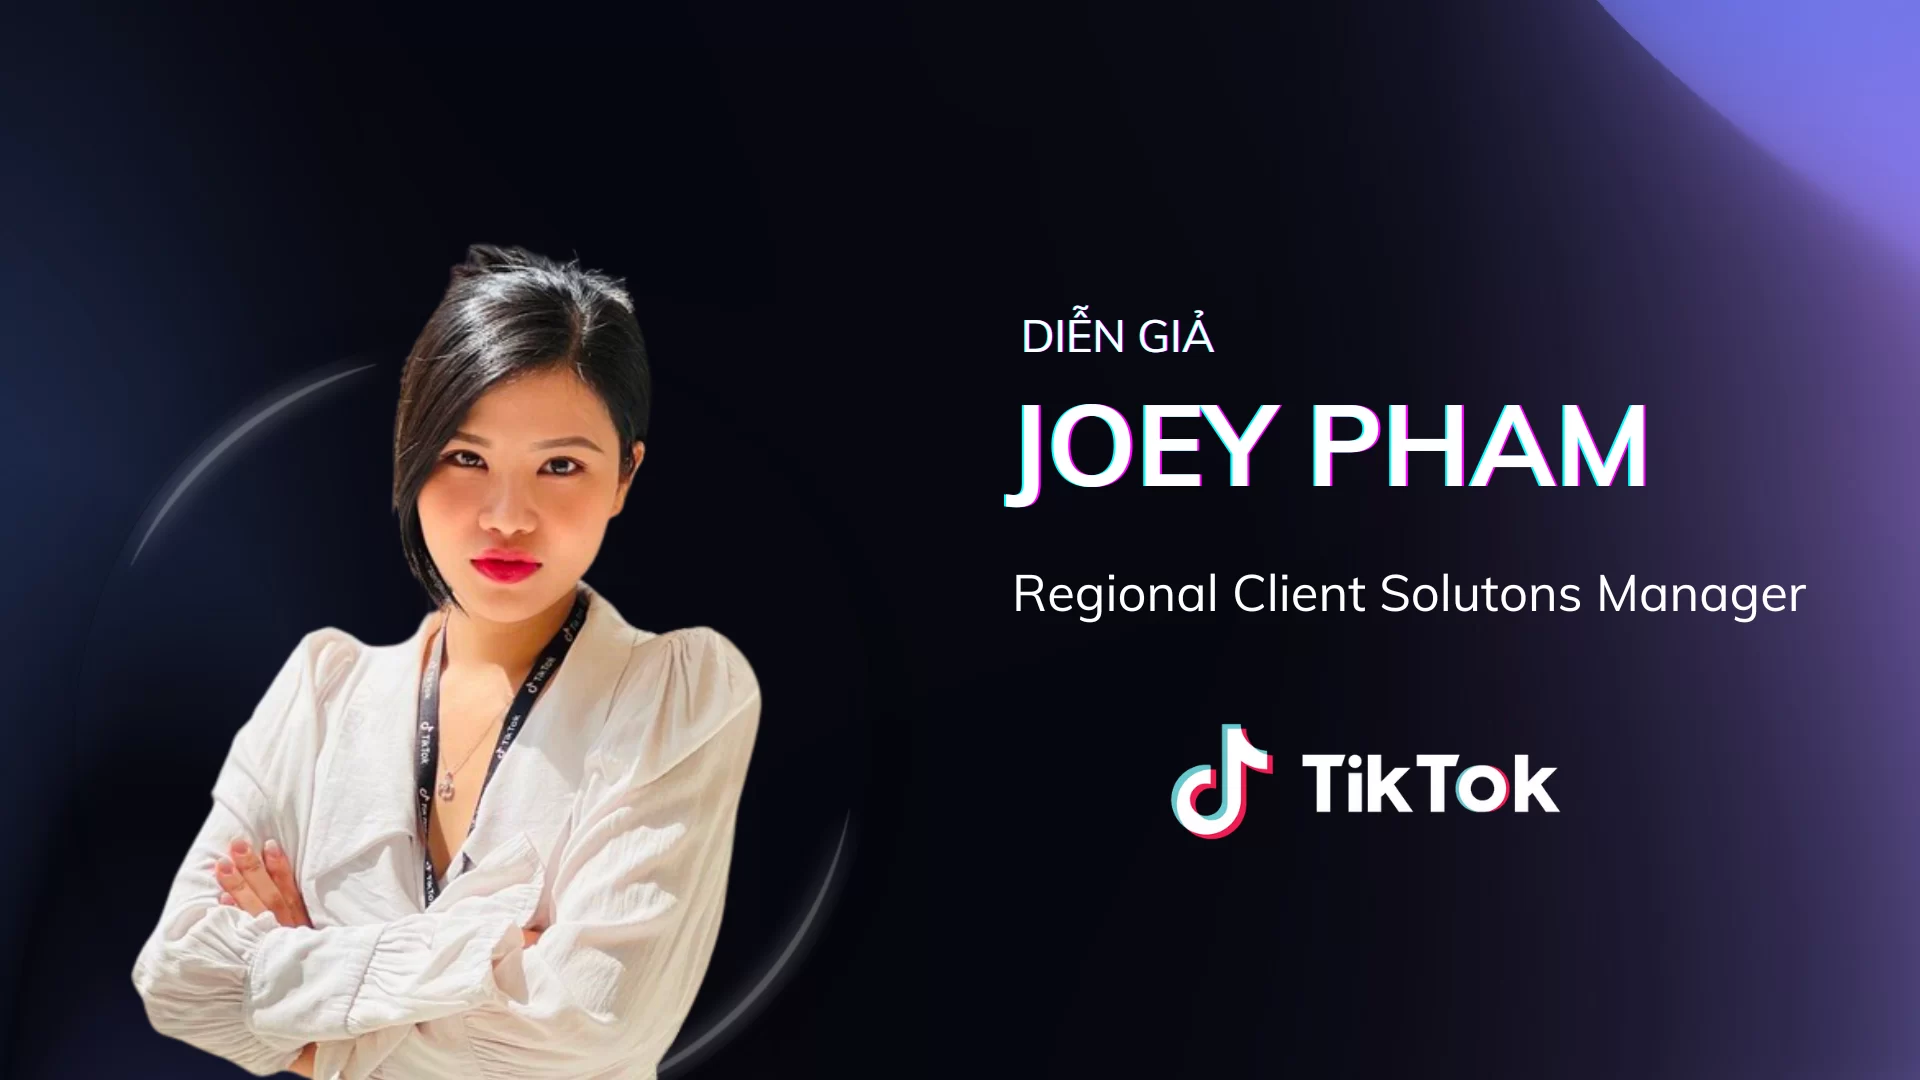 Ms. Joey Pham - Regional Client Solutions Manager, Tiktok